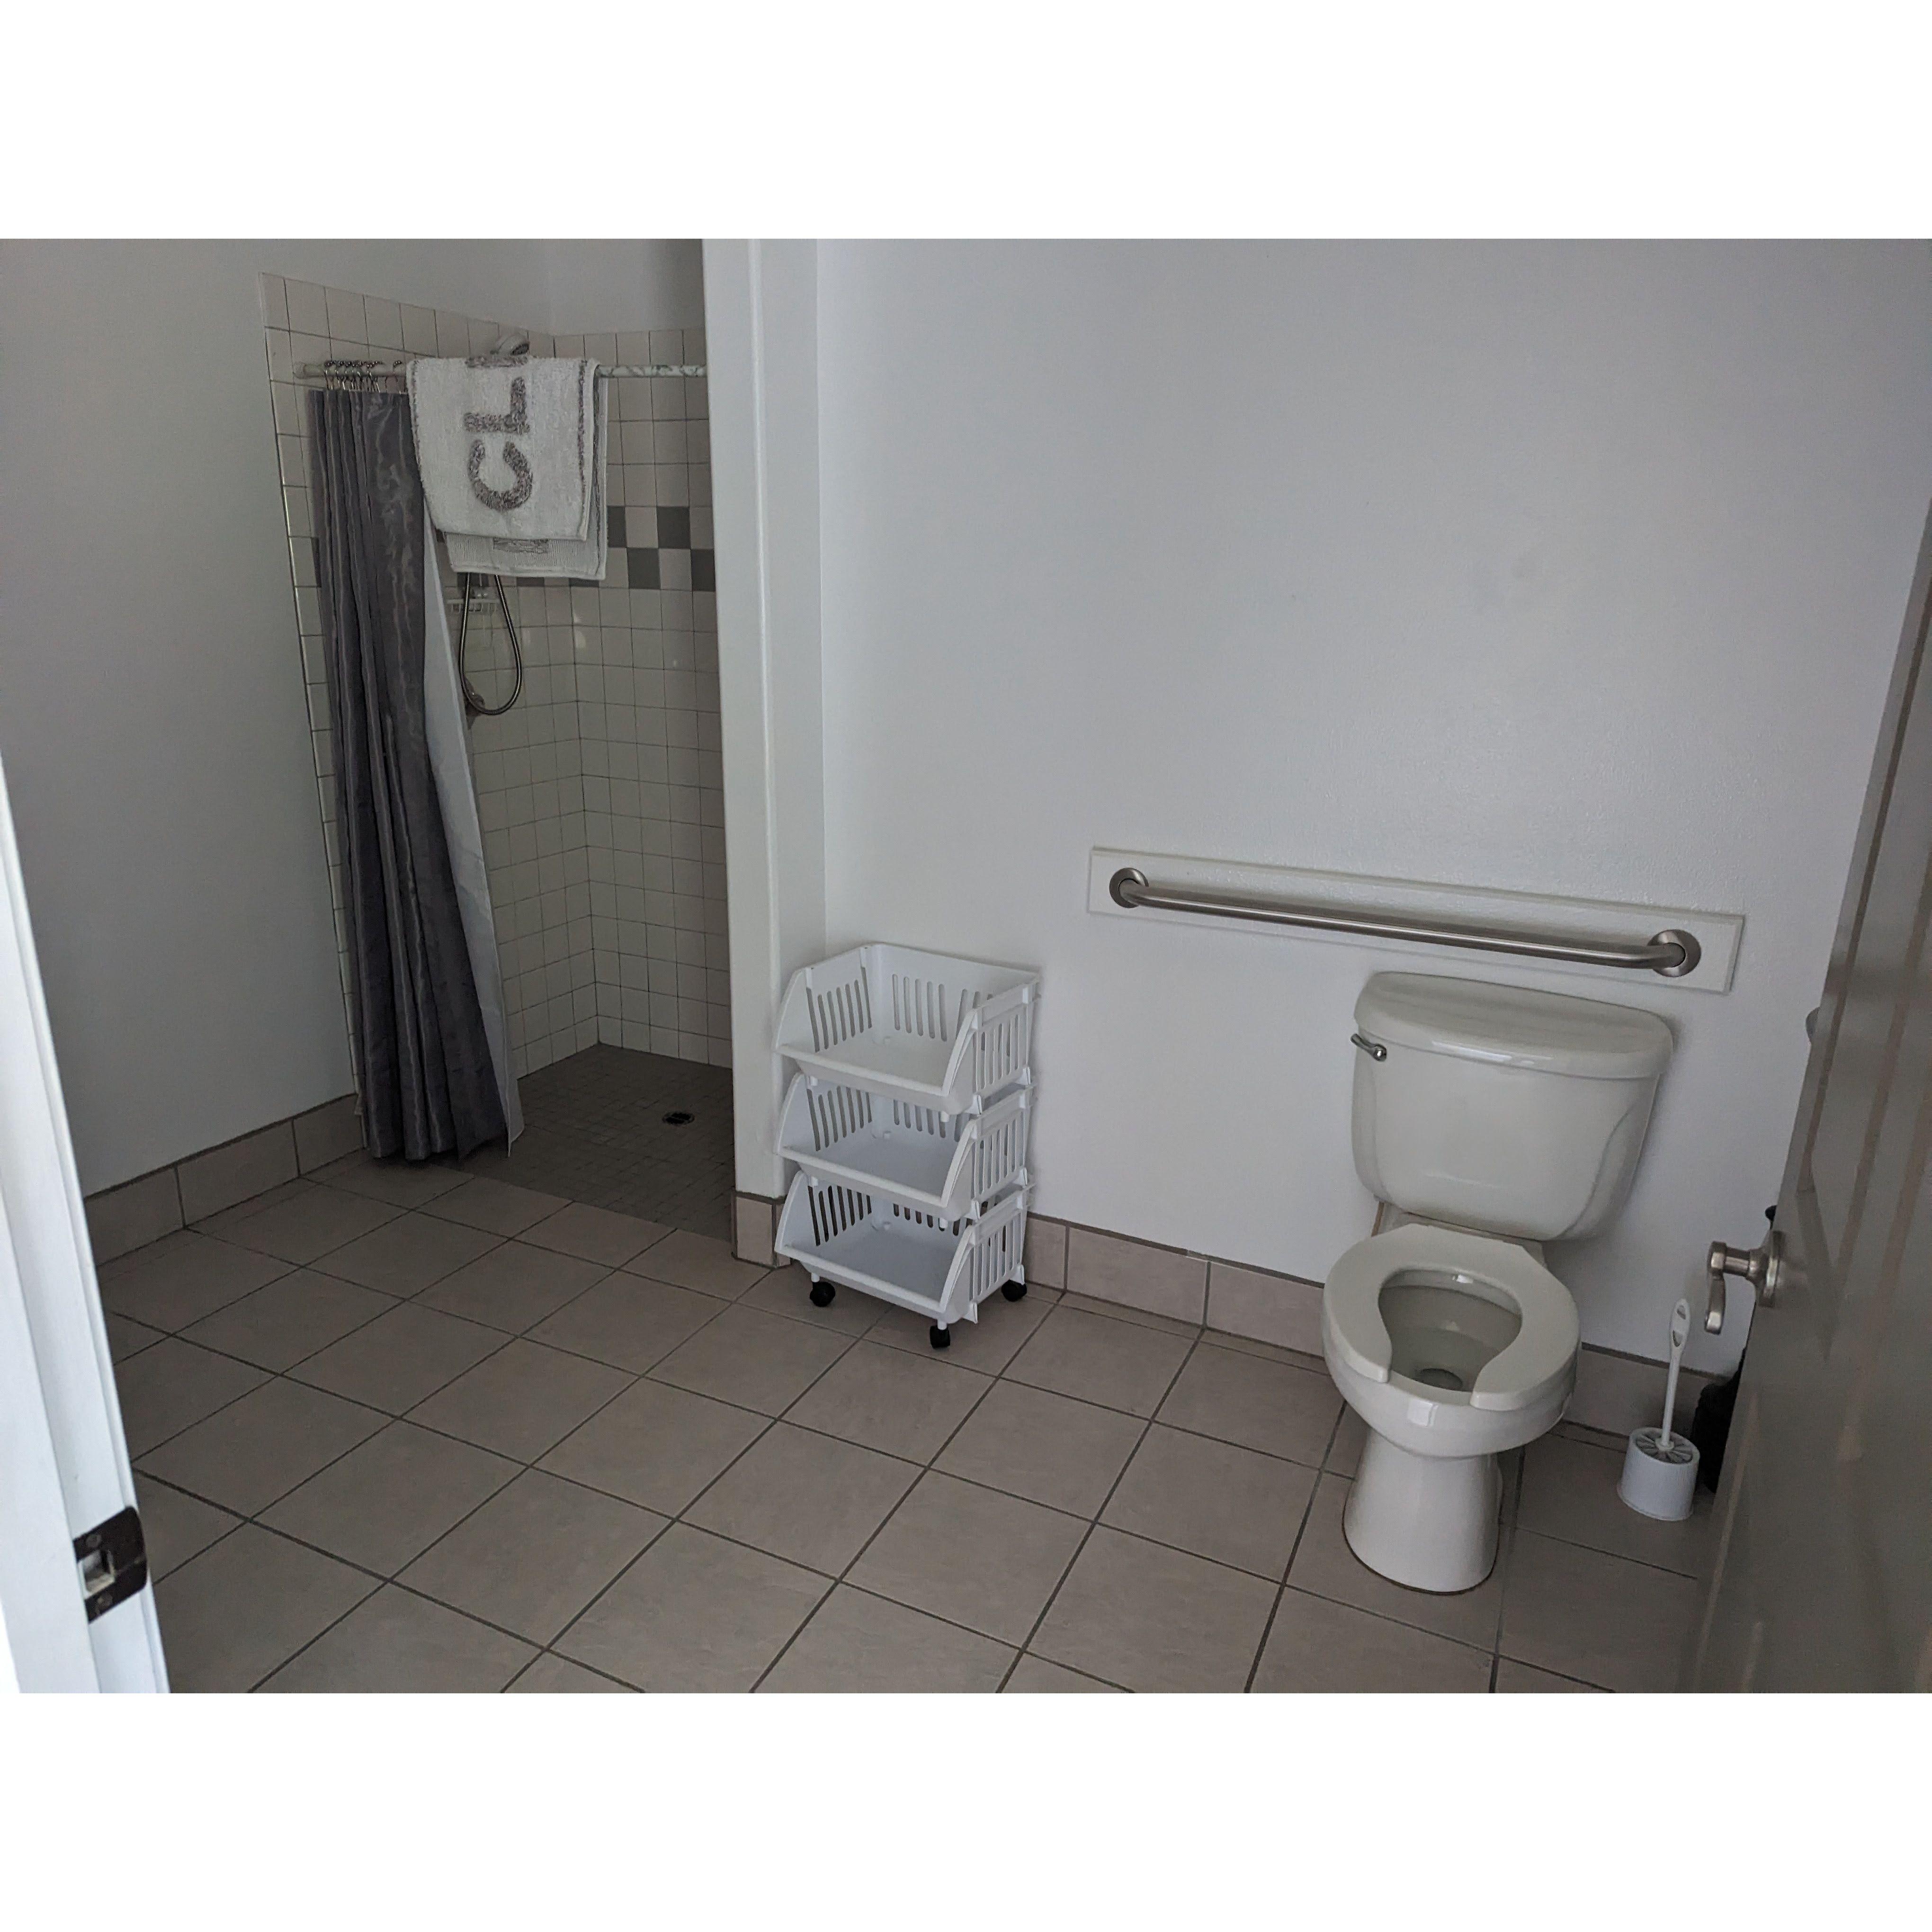 Bathroom in Lower Lodge (ADA accessible building)